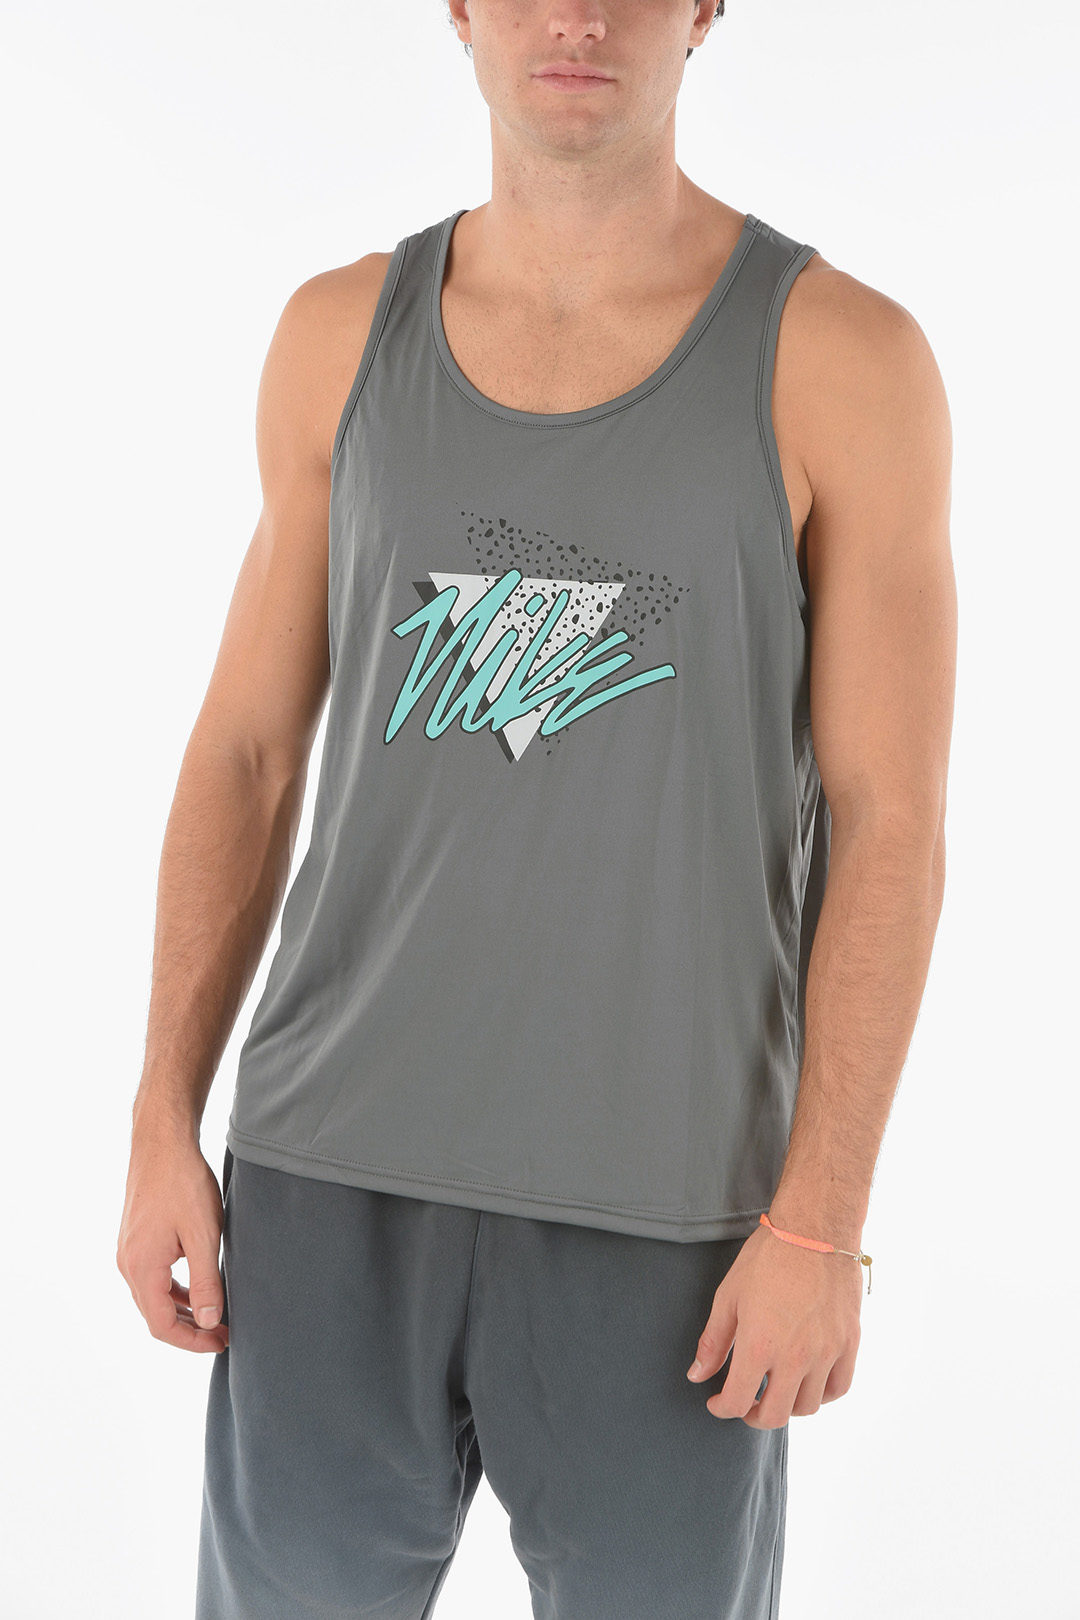 Nike SWIM Tank top with Logo-Print men - Glamood Outlet